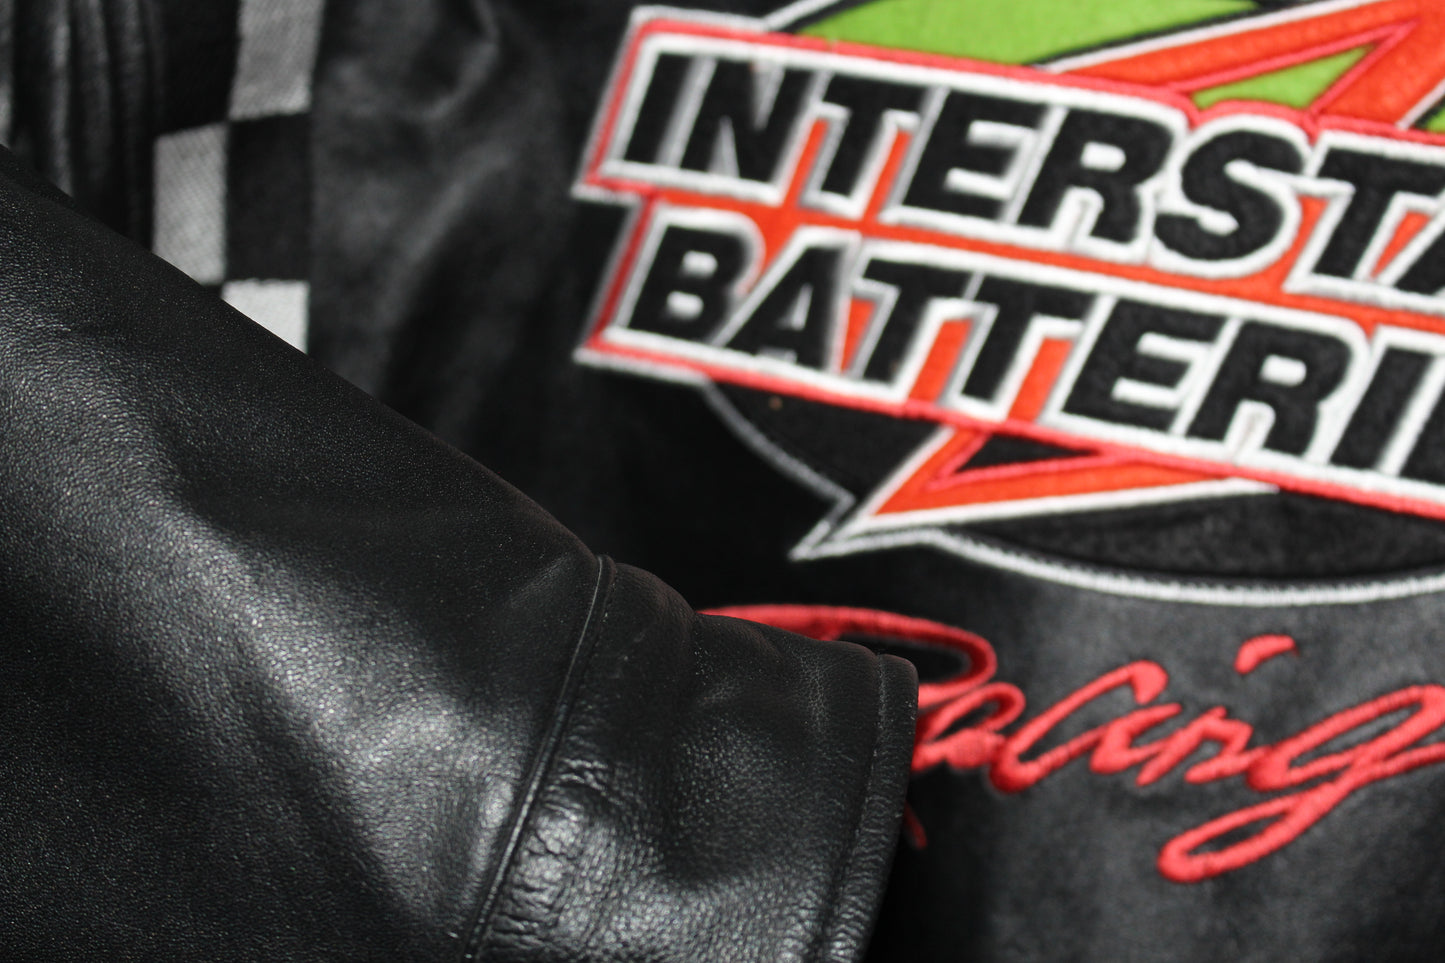 Rare Interstate Batteries Racing NASCAR Bobby Labonte #18 Leather Jacket (XL)